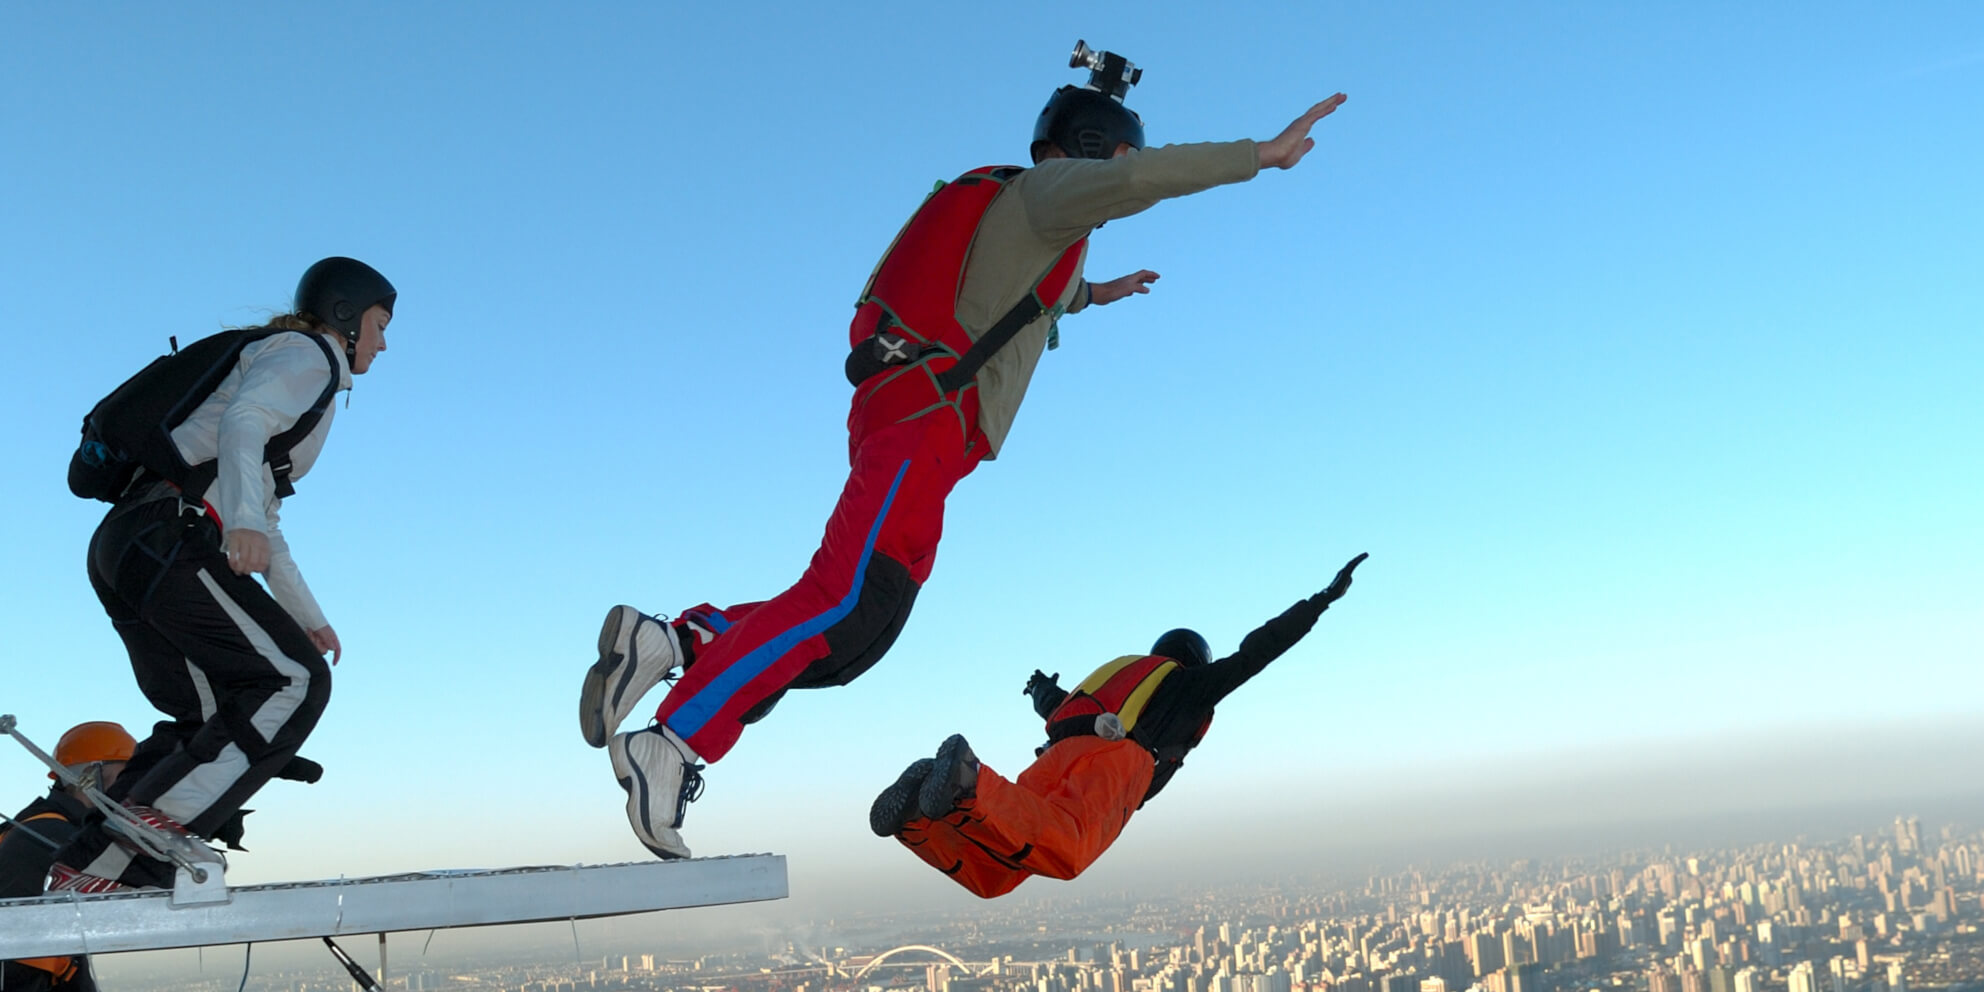 The Ultimate BASE Jump: Dream Jump Dubai